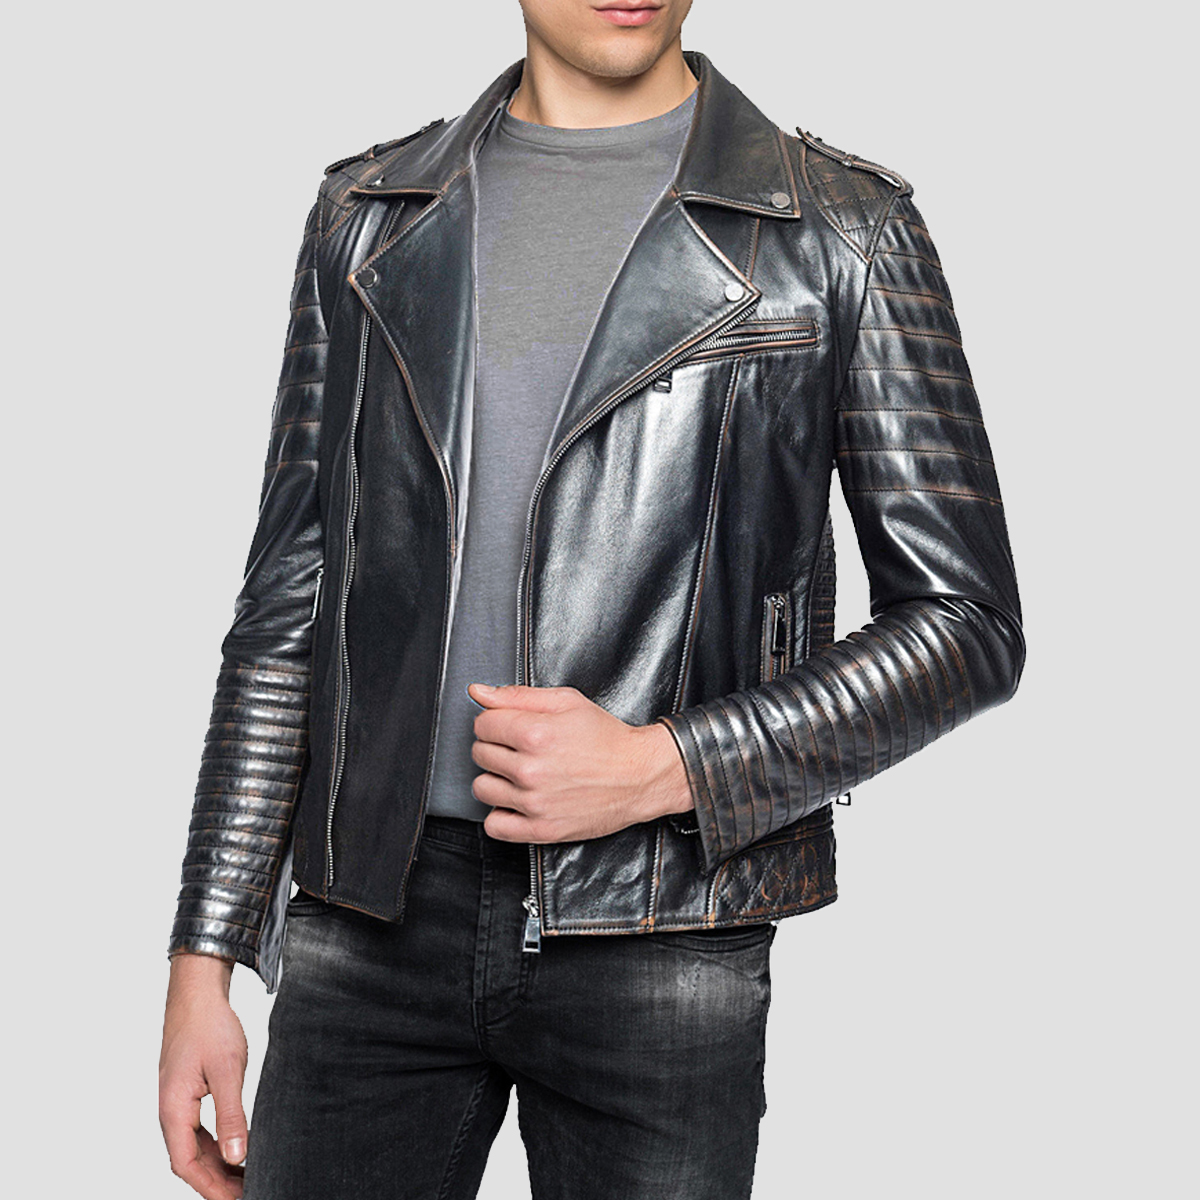 Classic Metallic Silver Vintage Biker Leather Jacket - The Vintage Leather